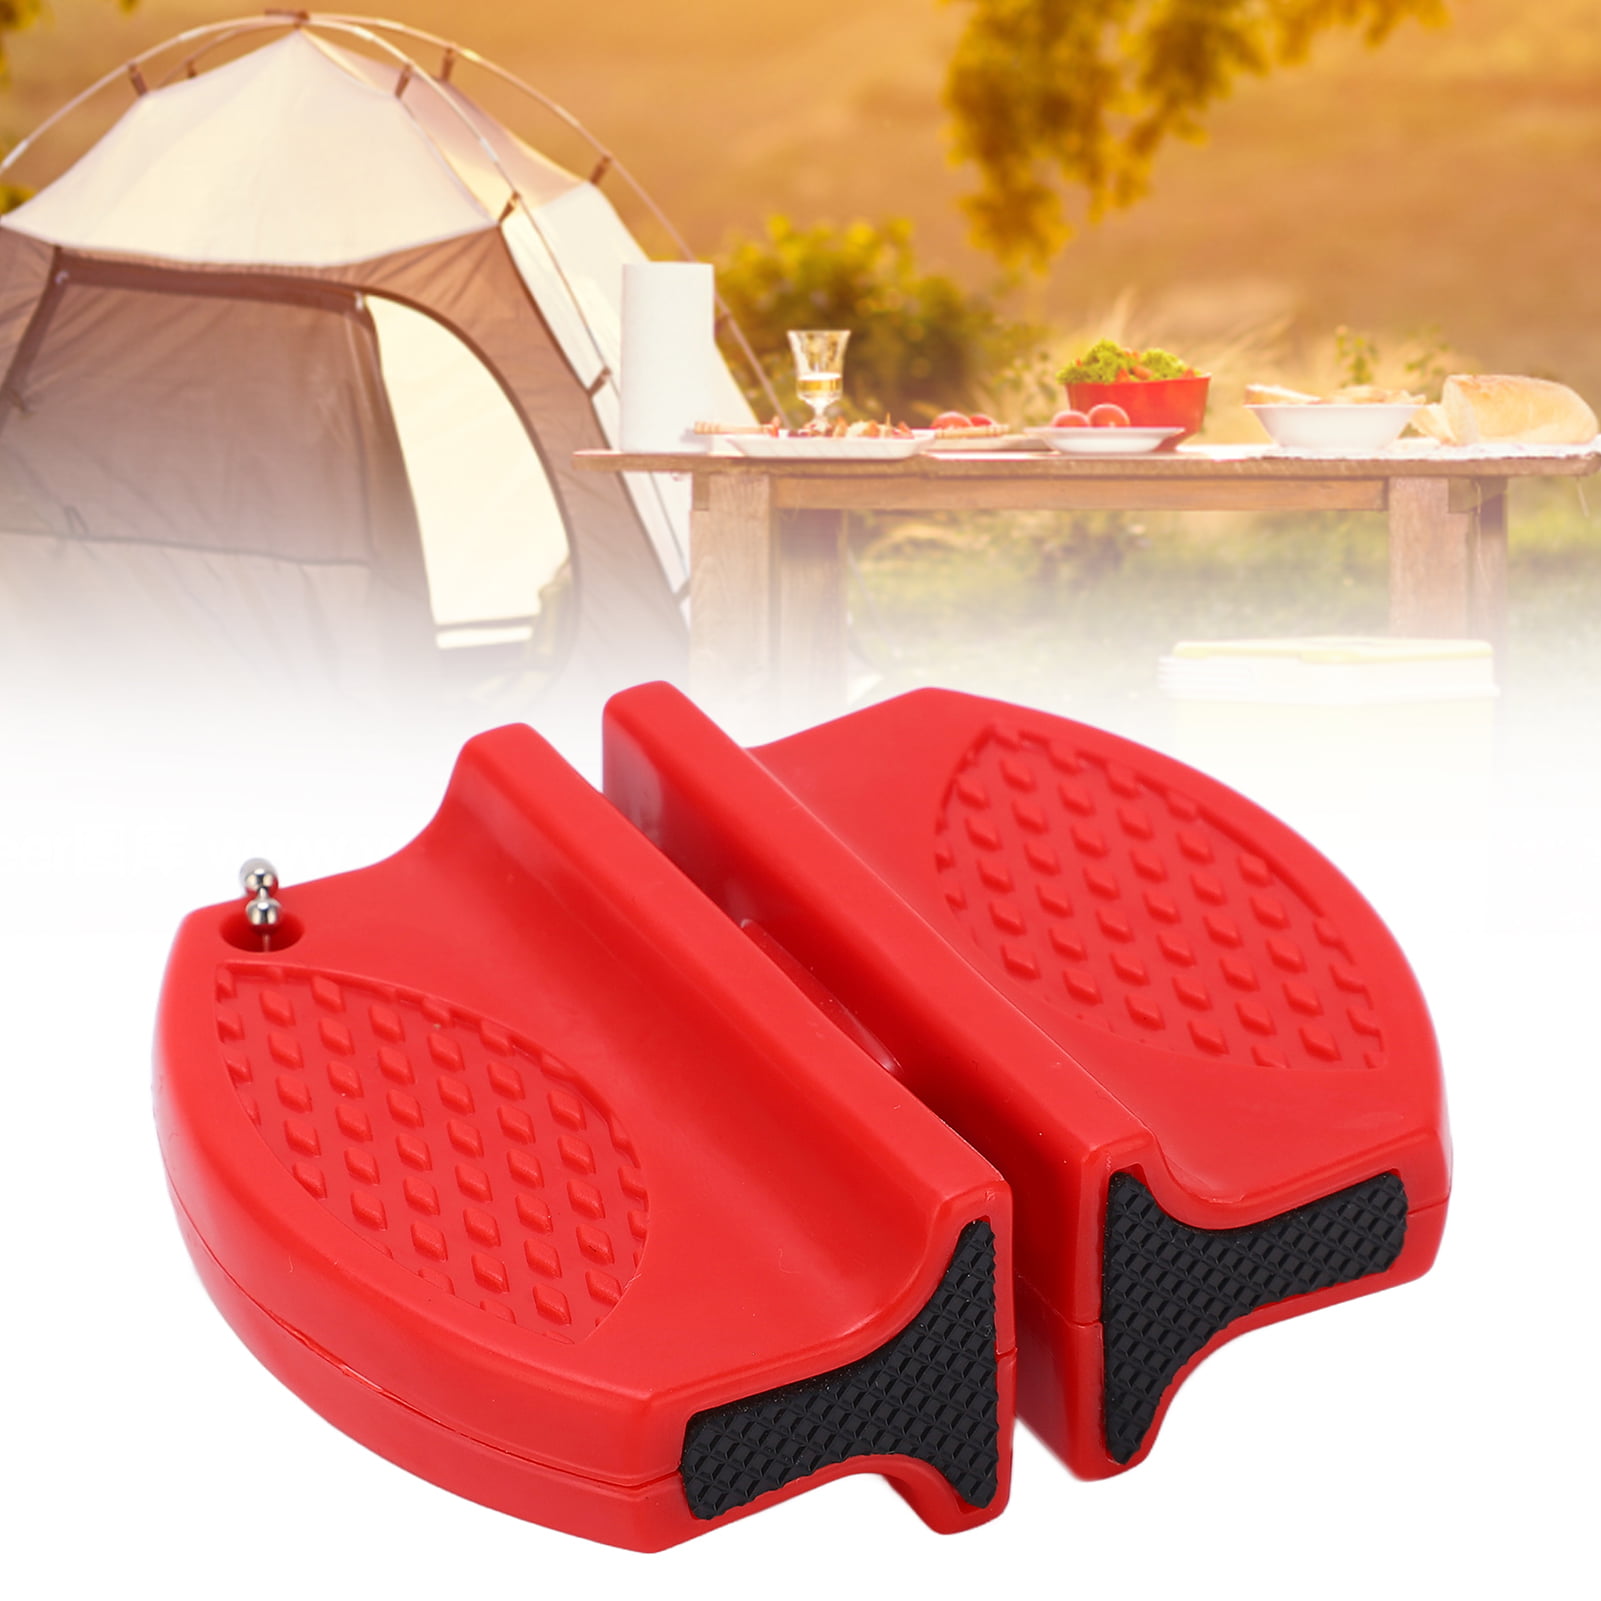 Portable Mini kitchen Knife Sharpener Two-stage Camping Pocket nife  Sharpener